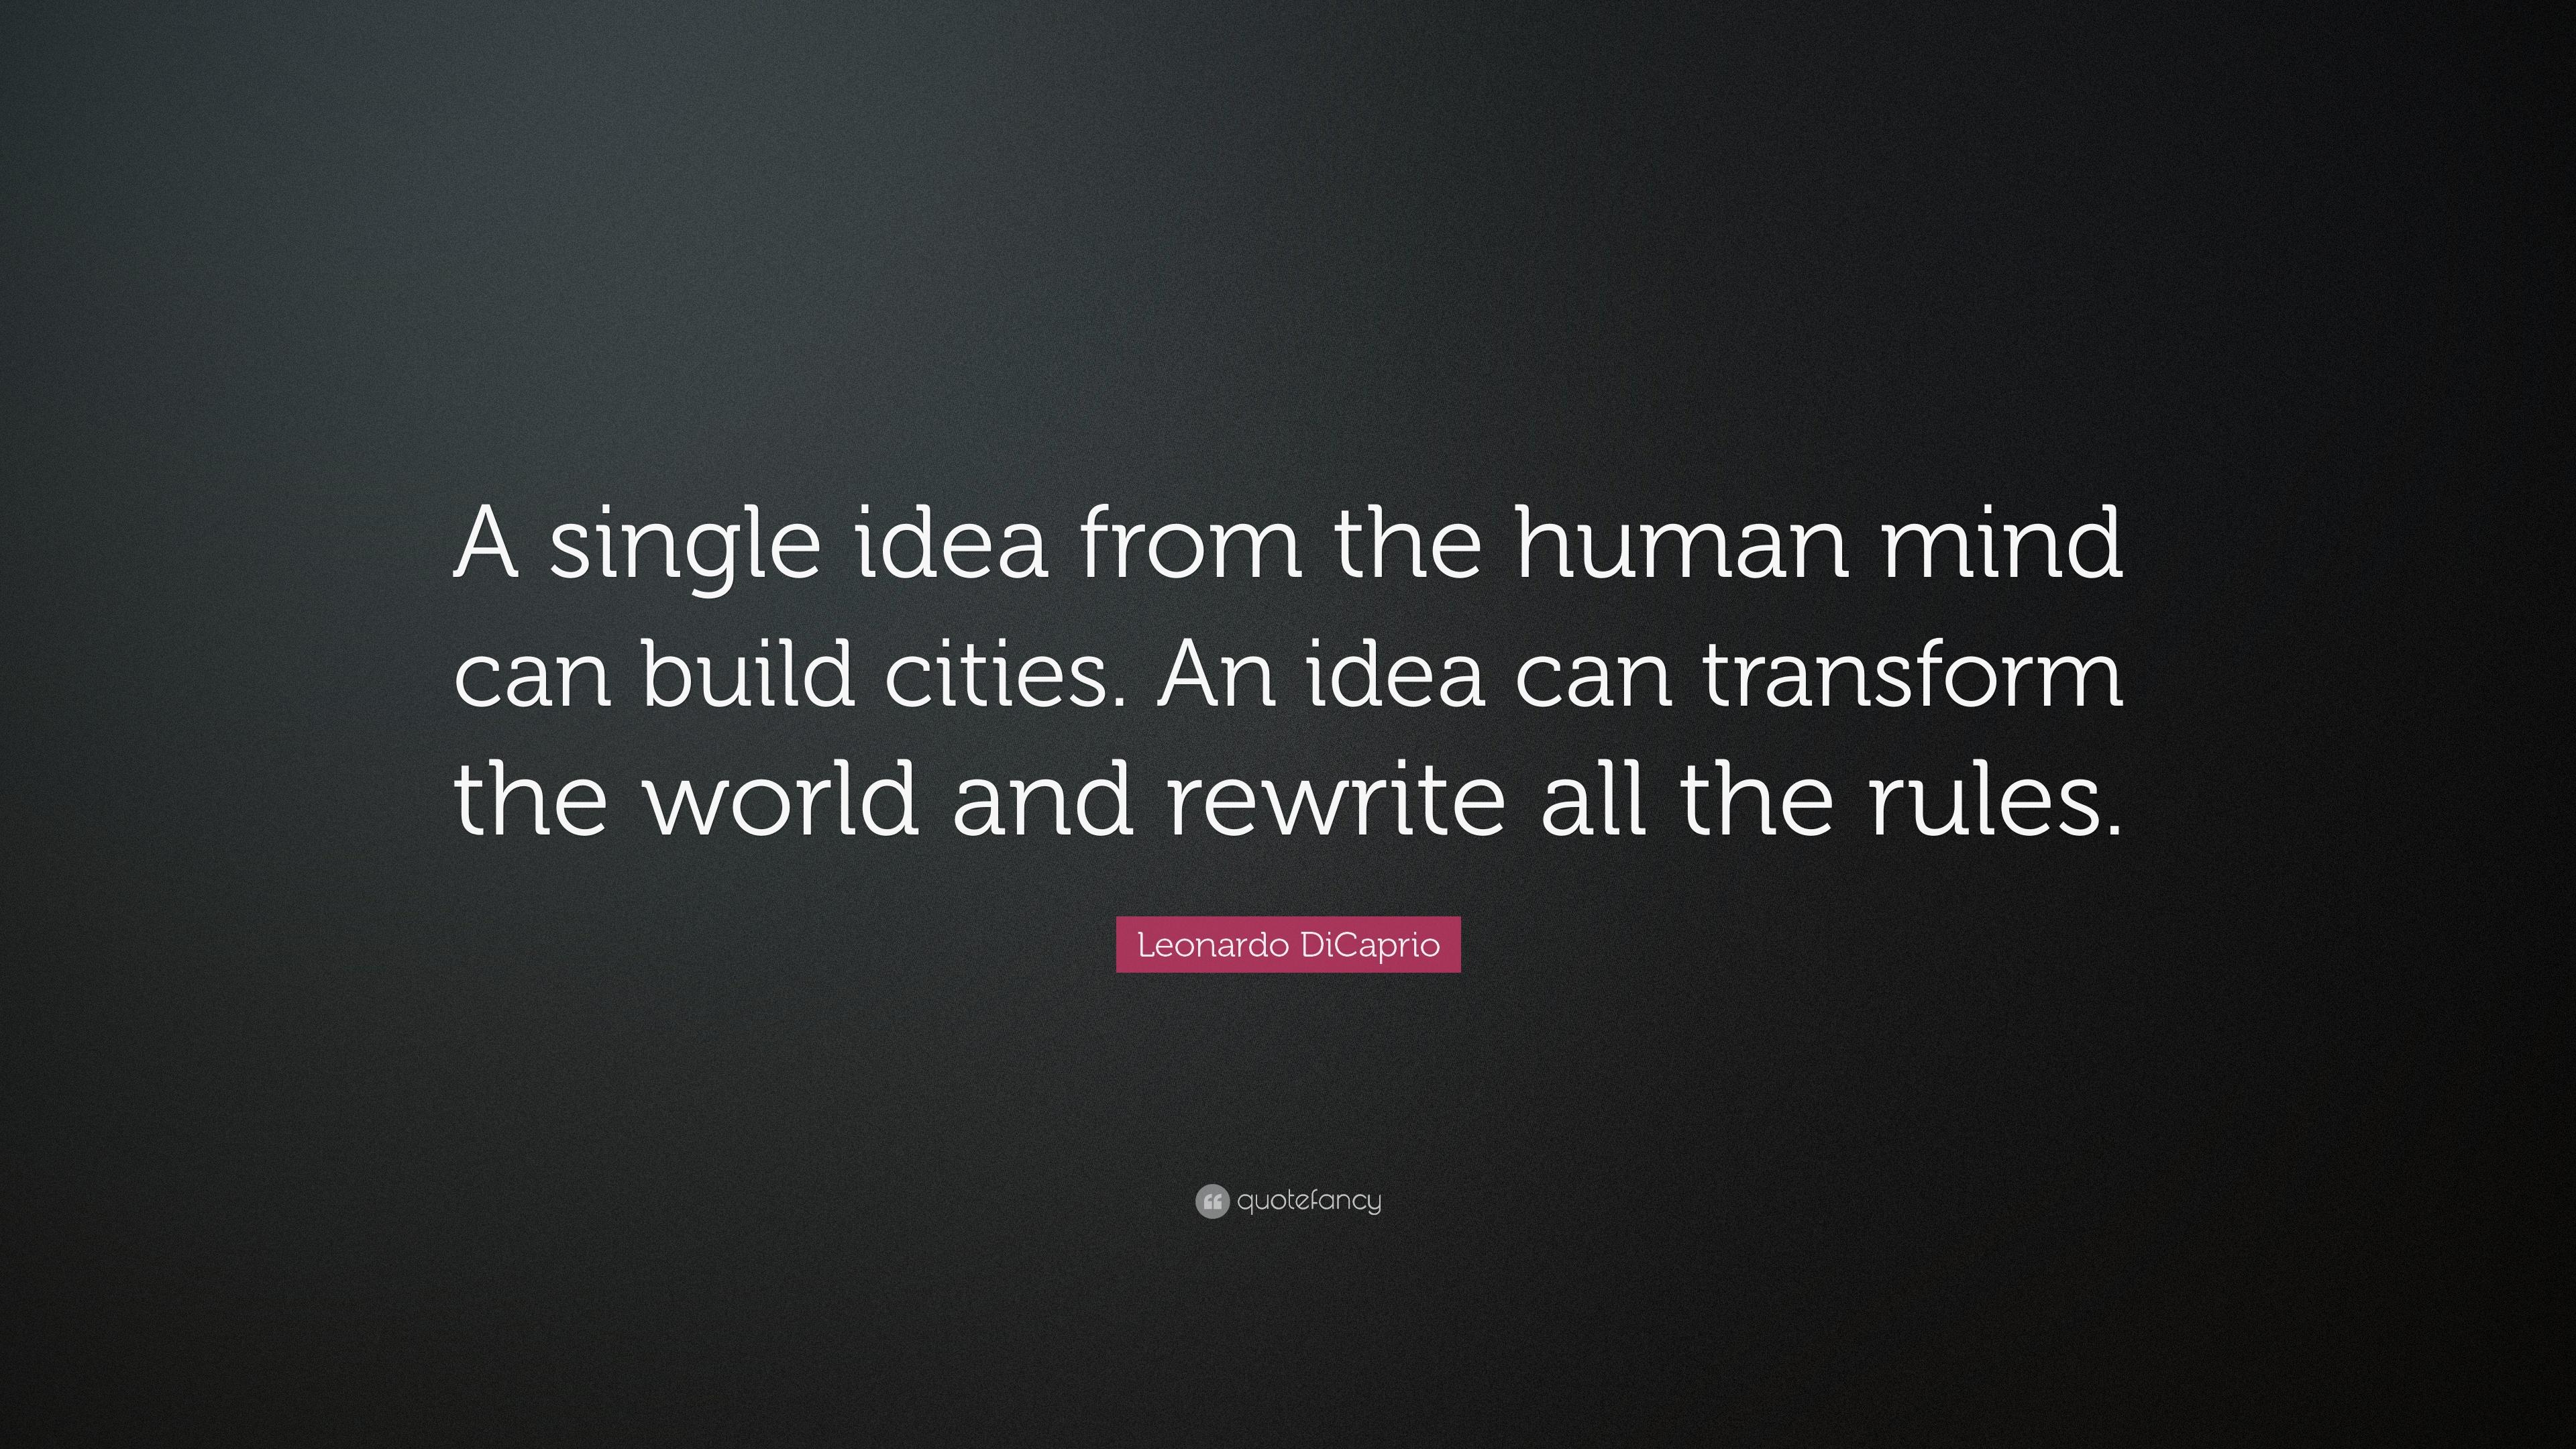 Leonardo DiCaprio Quote: “A single idea from the human mind